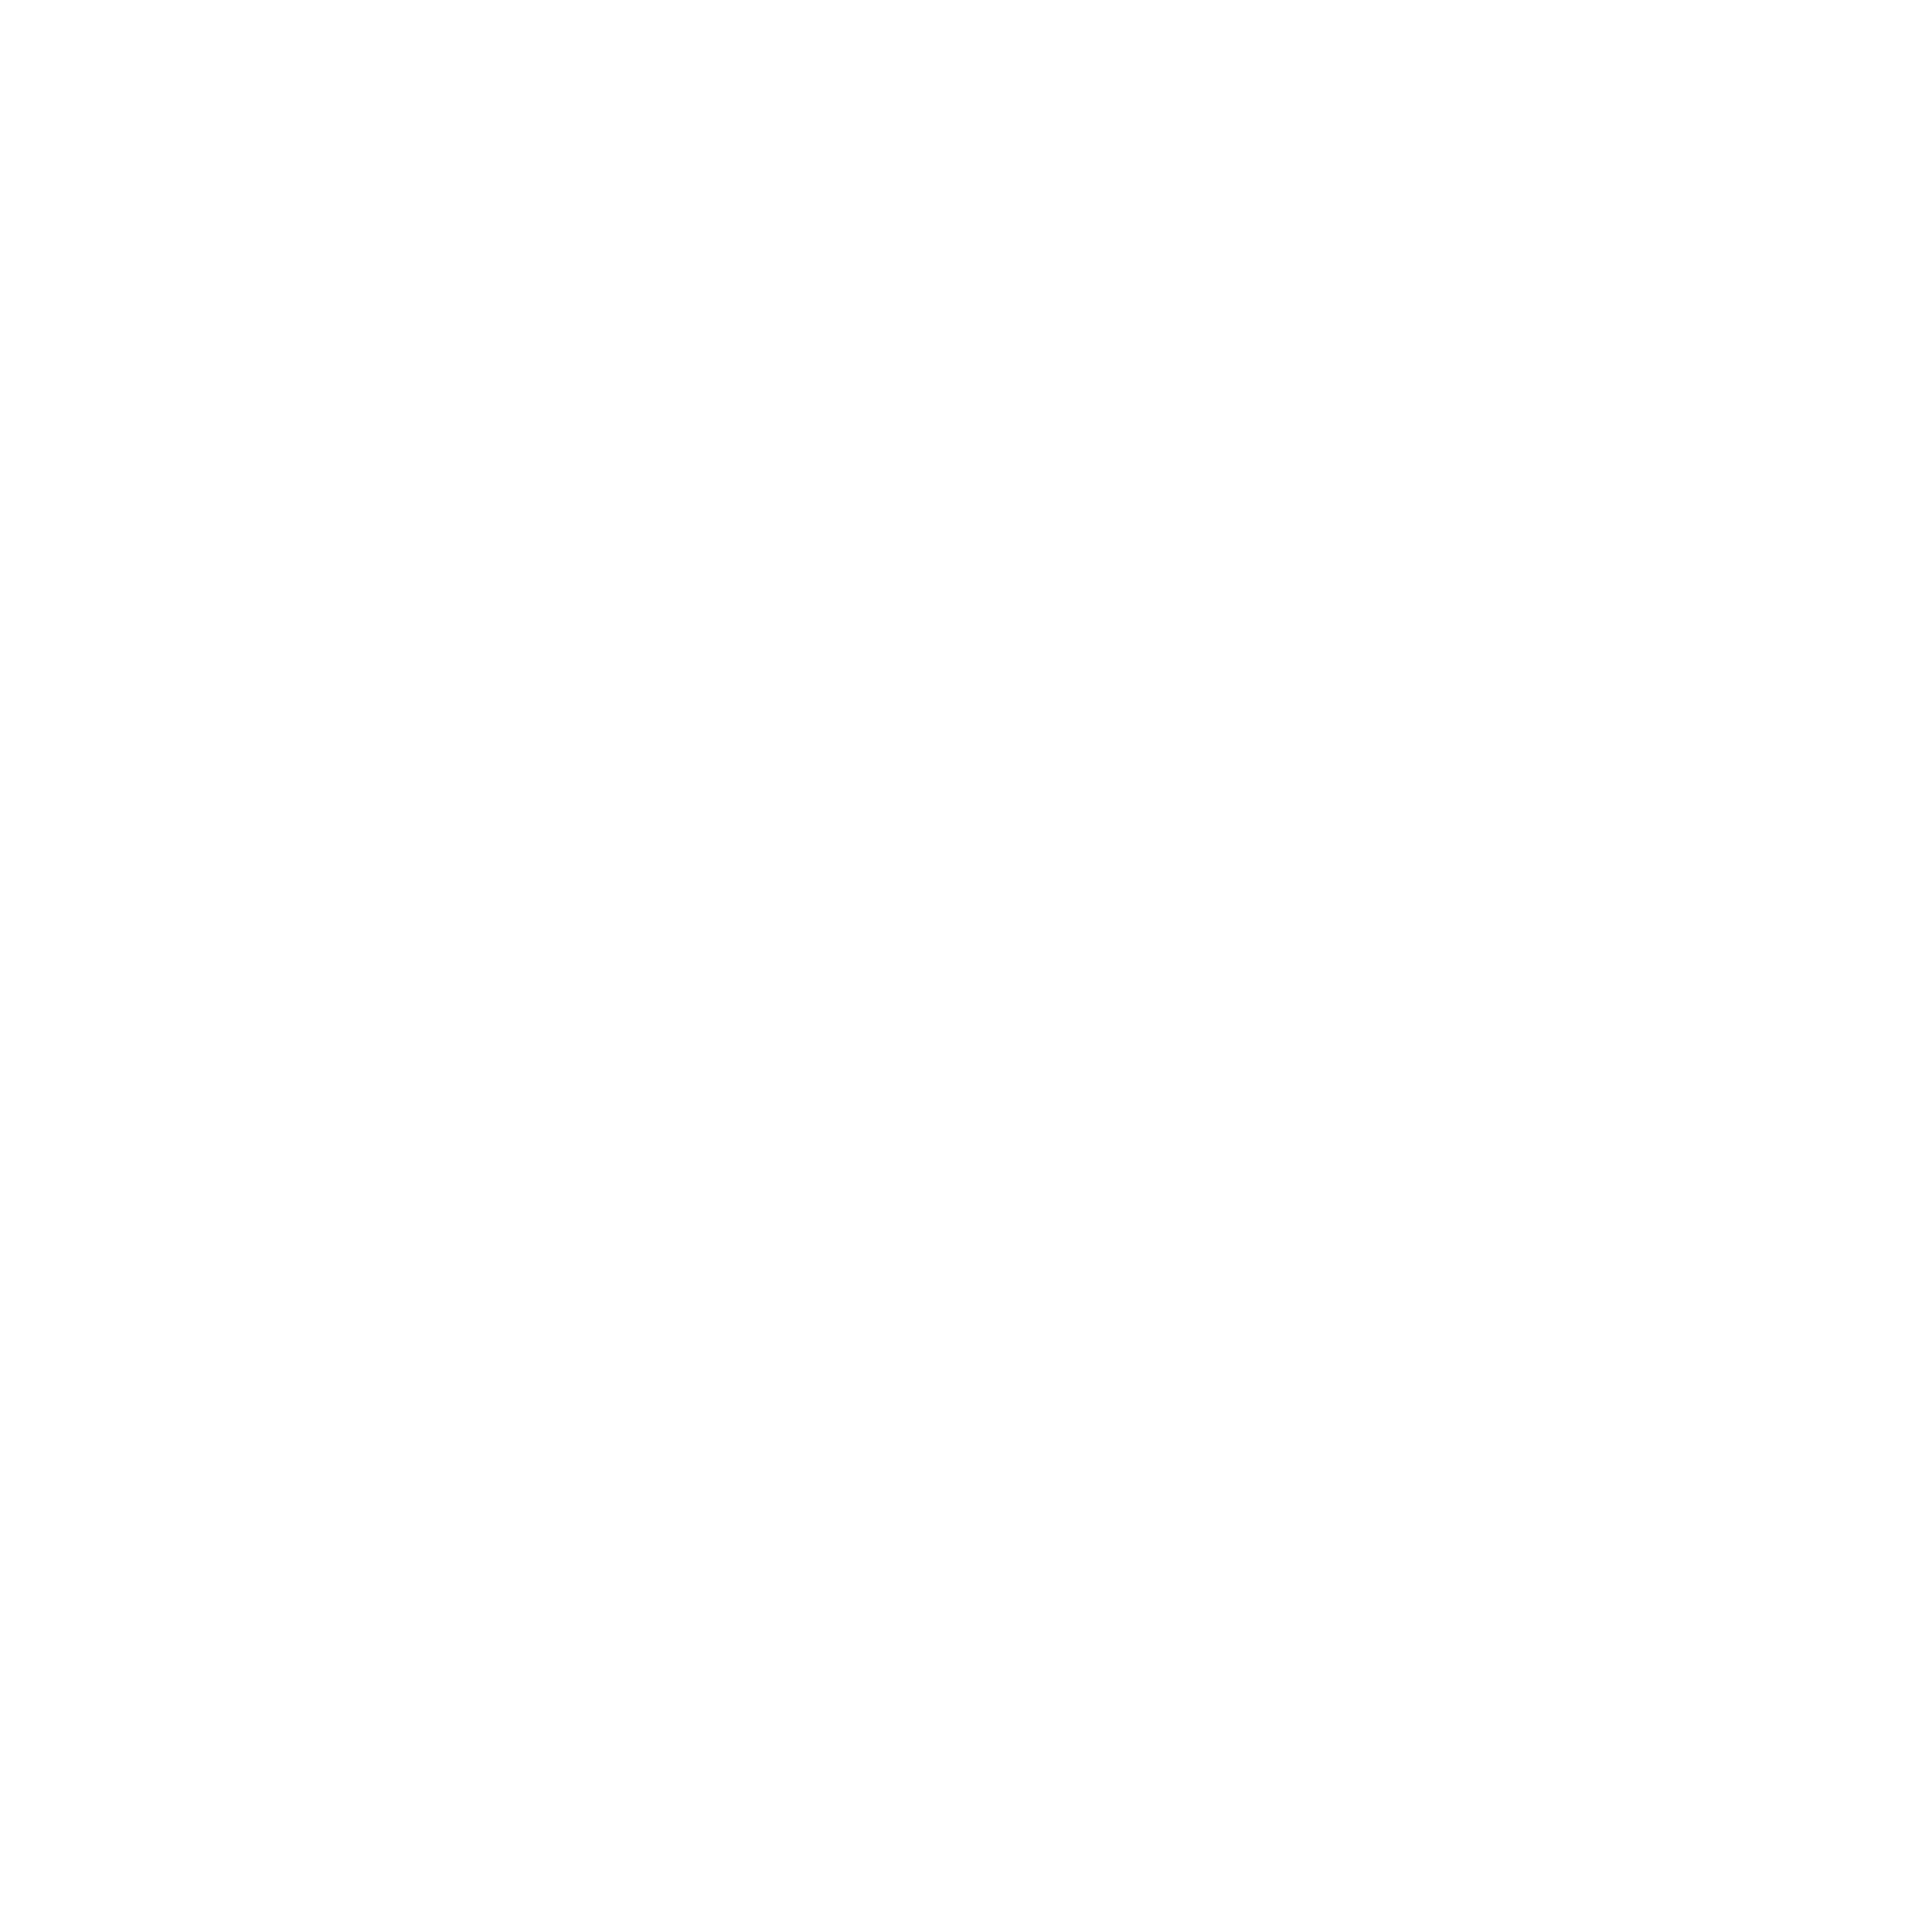 Juan david lopez